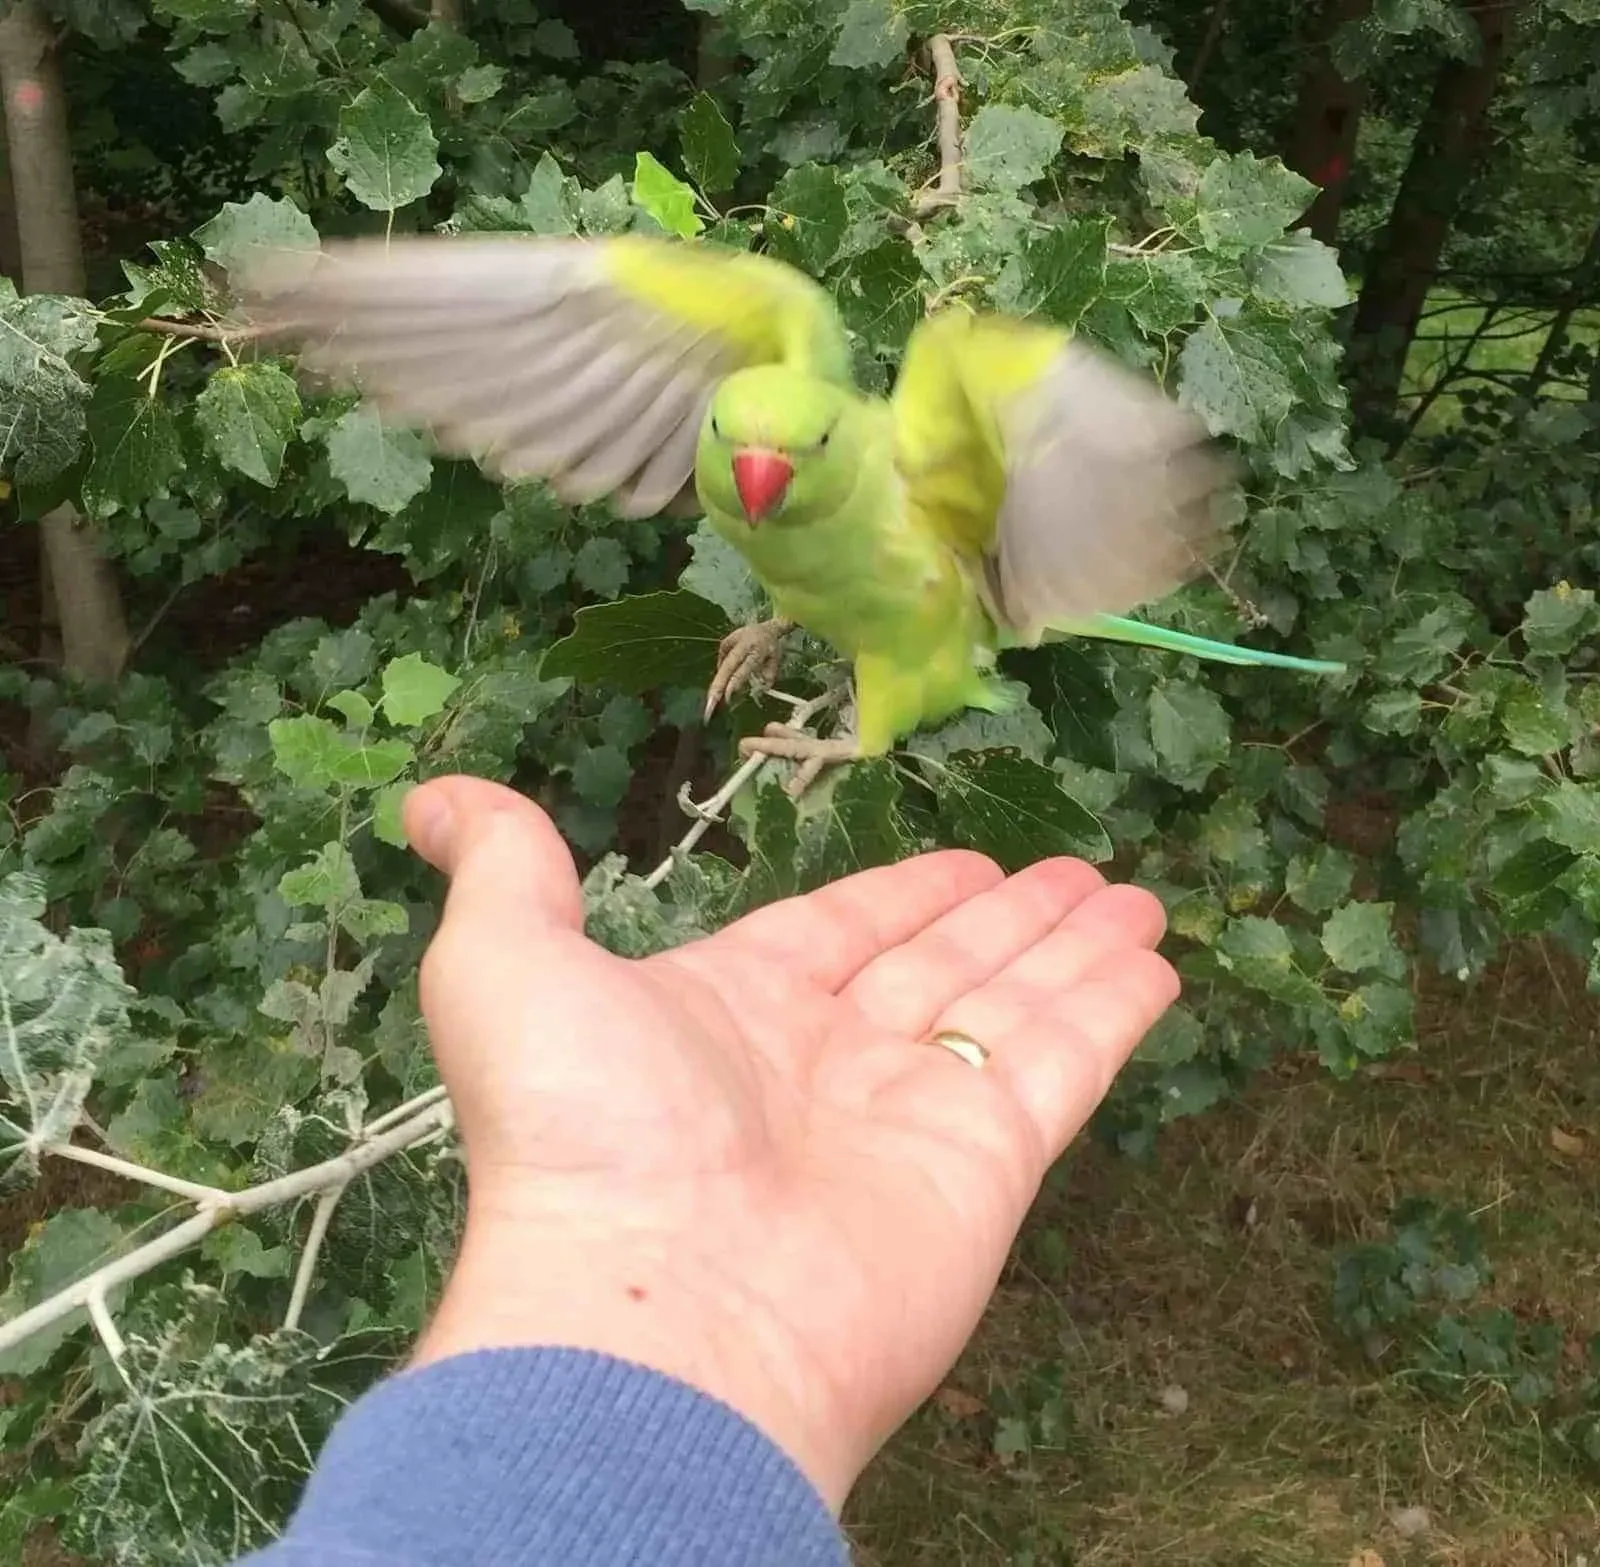 Kensington Gardens parakeet on a hand.